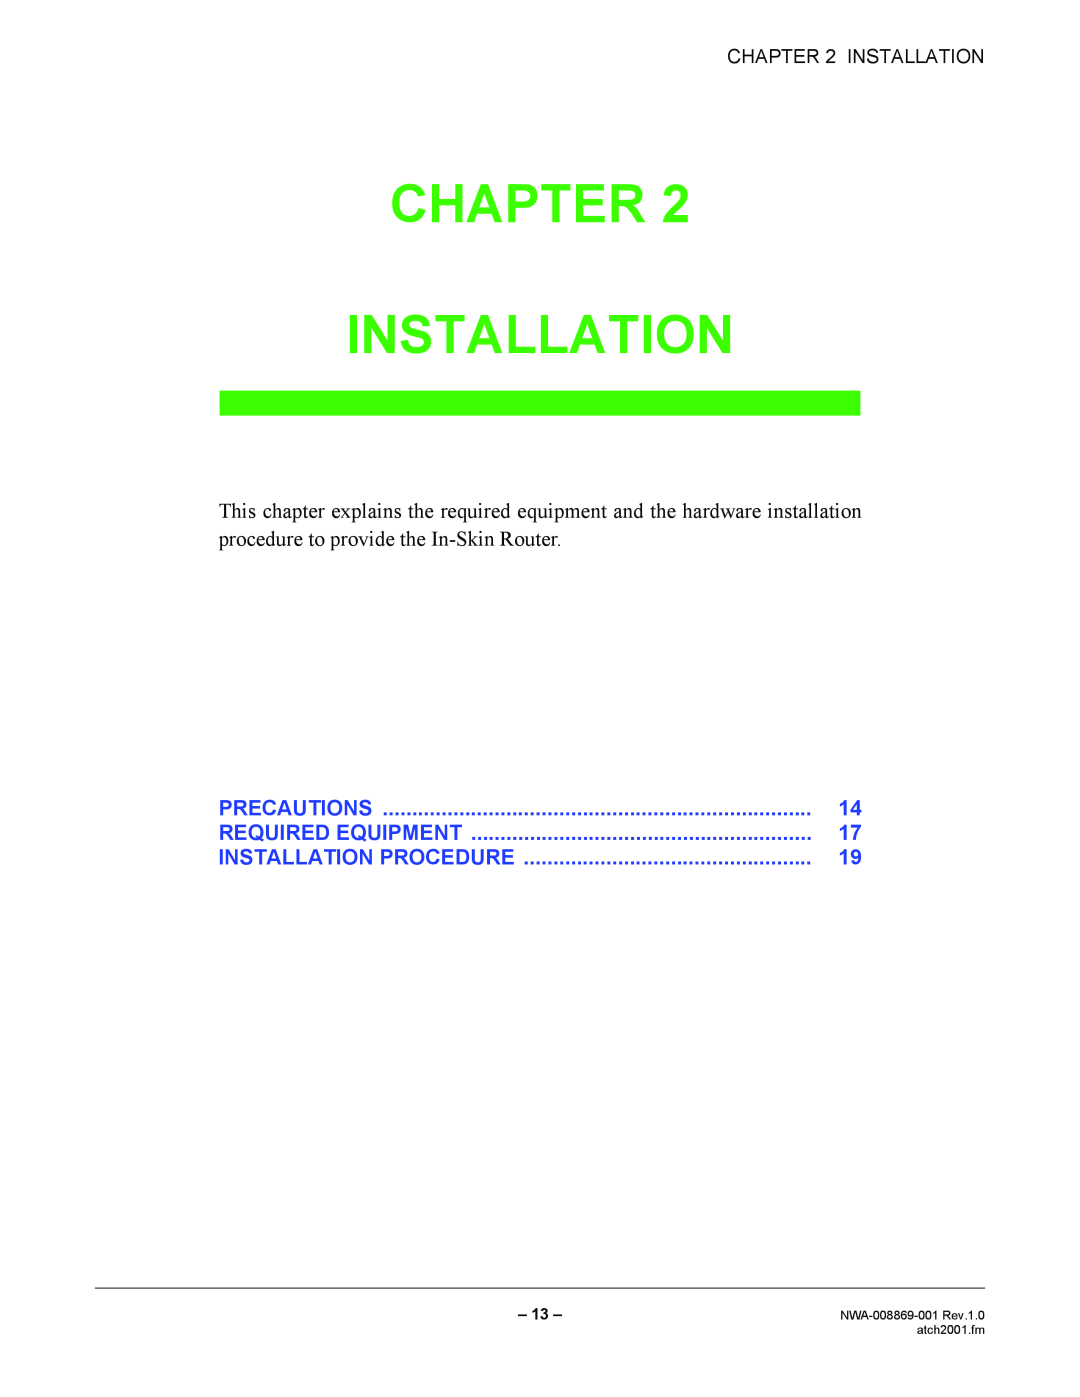 NEC manual Chapter Installation, NWA-008869-001 Rev.1.0 